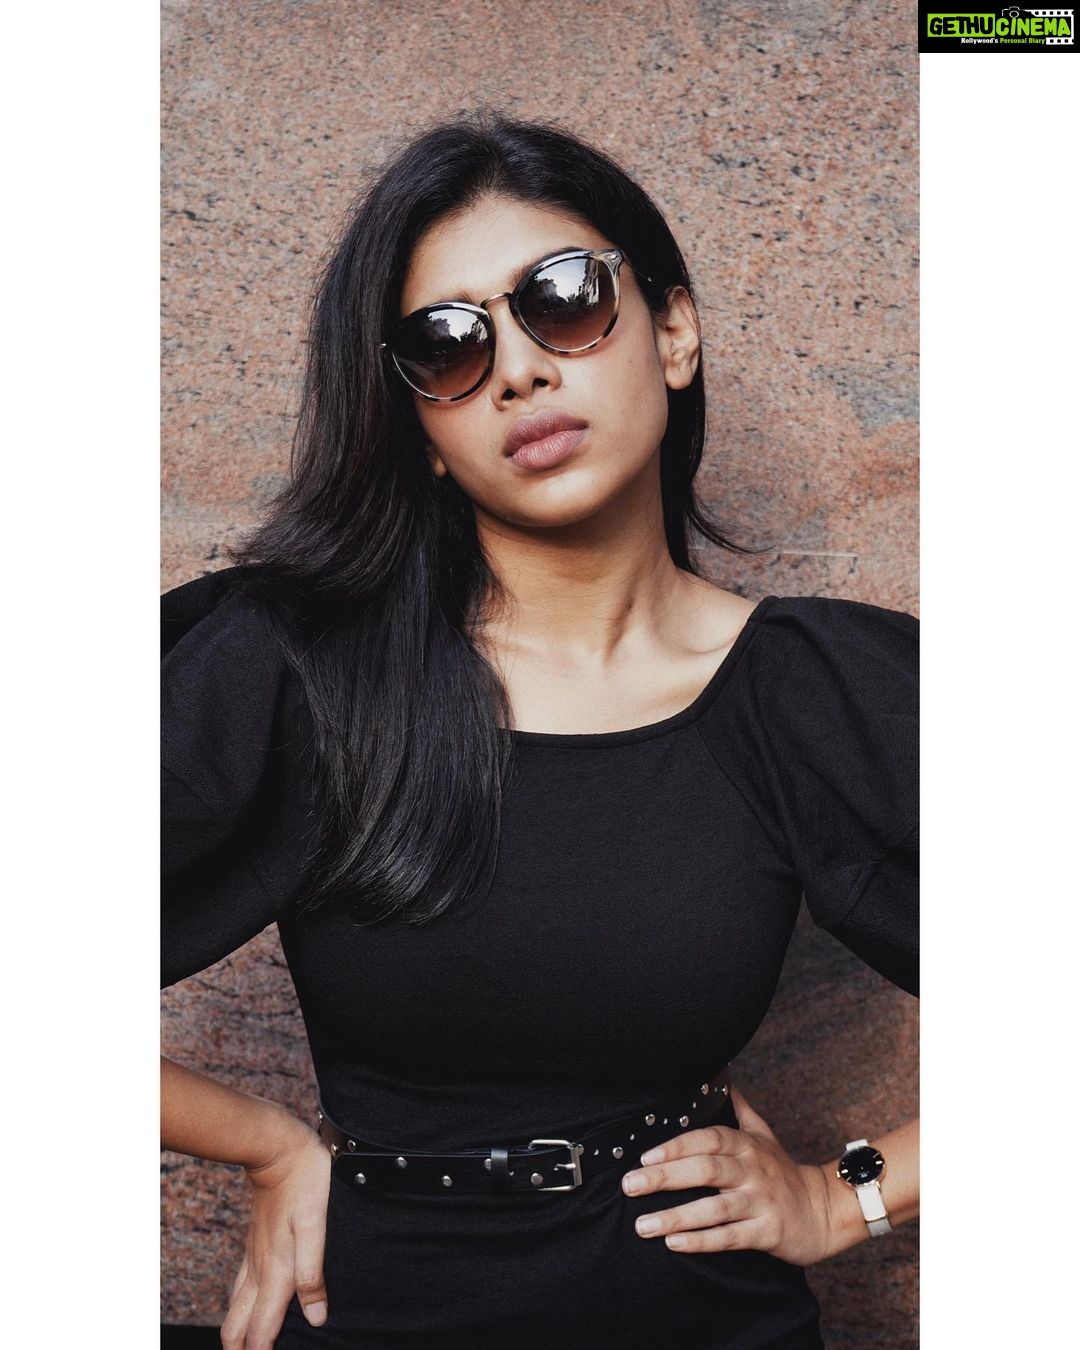 Dushara Vijayan Instagram - Shot by : @karthiksippy www.dusharaofficial.com #dusharaofficial #actor #actress #model #indianmodel #indianactor #indianactress #fashion #design #photoshoot #indian #southindian #stylist #makeup #artist #fashionmodel #style #modeling #anbullaghilli Chennai, India